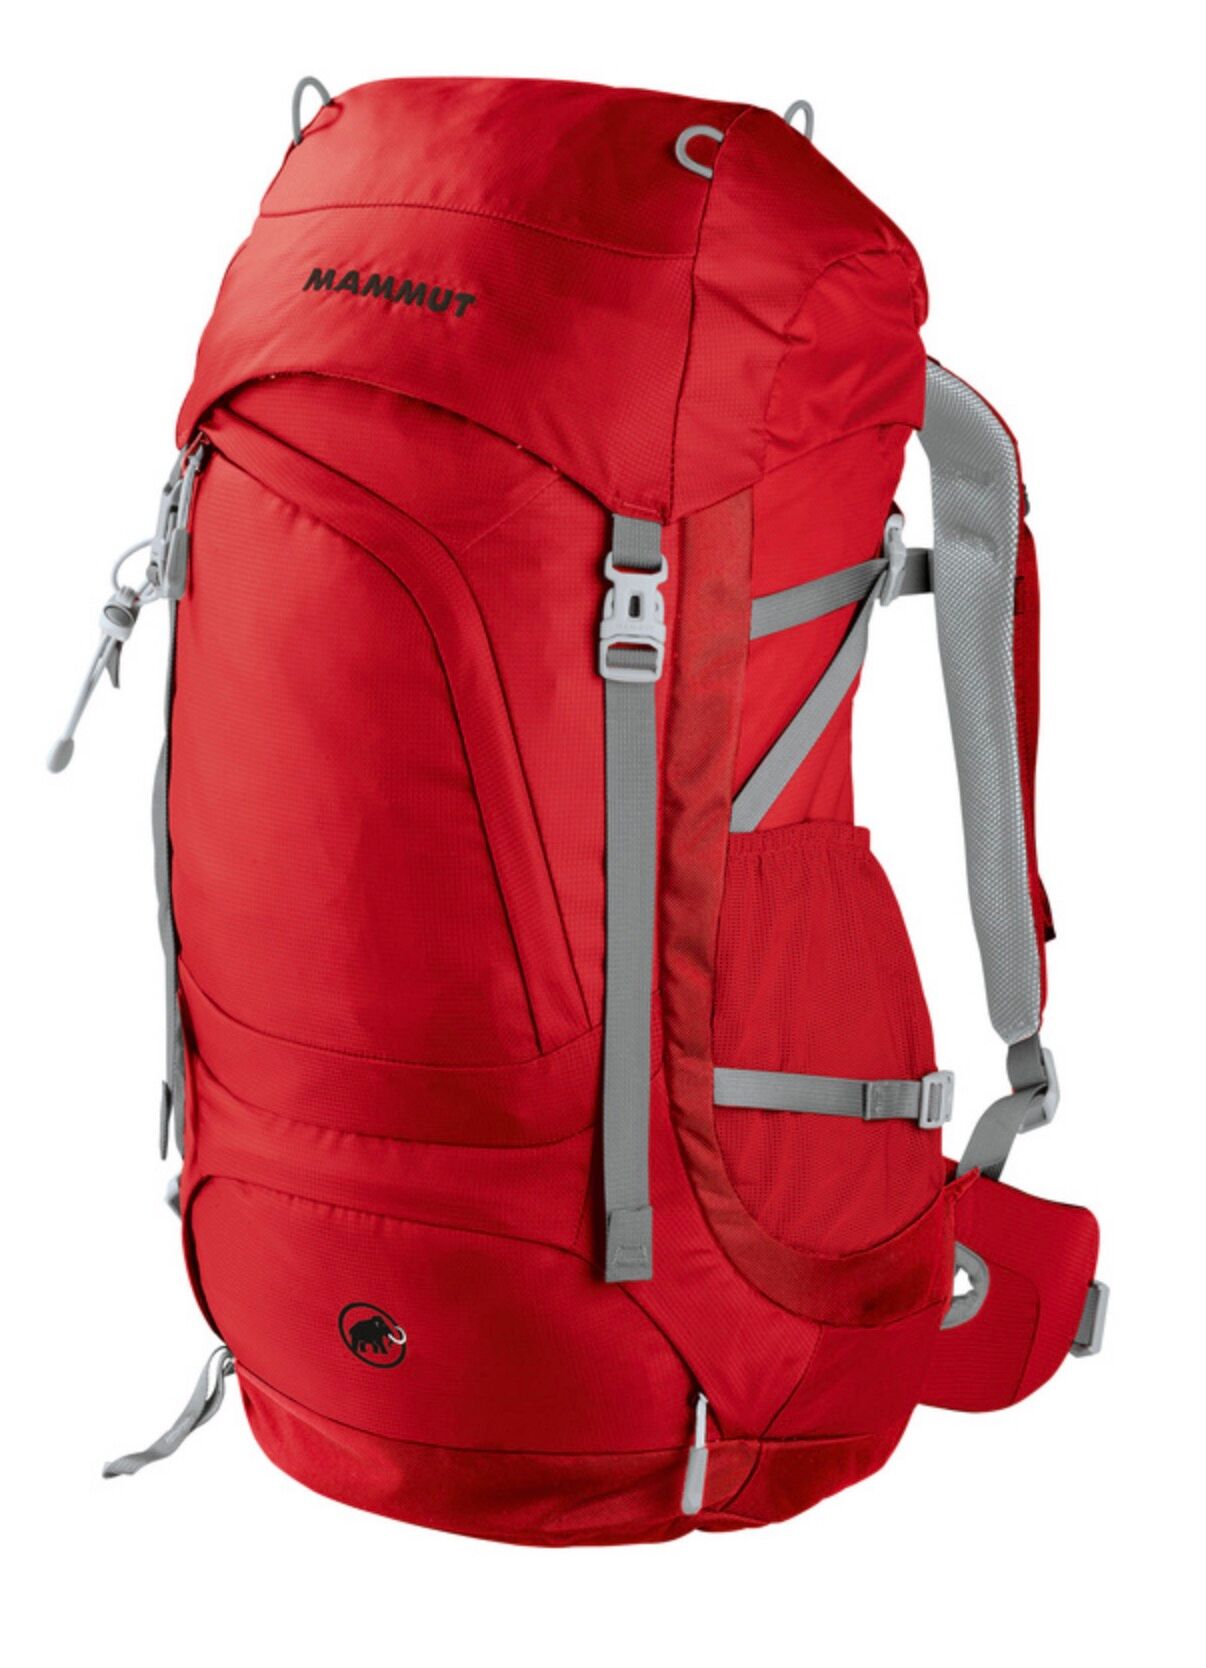 Mammut - Creon Pro 30 L - Hiking backpack